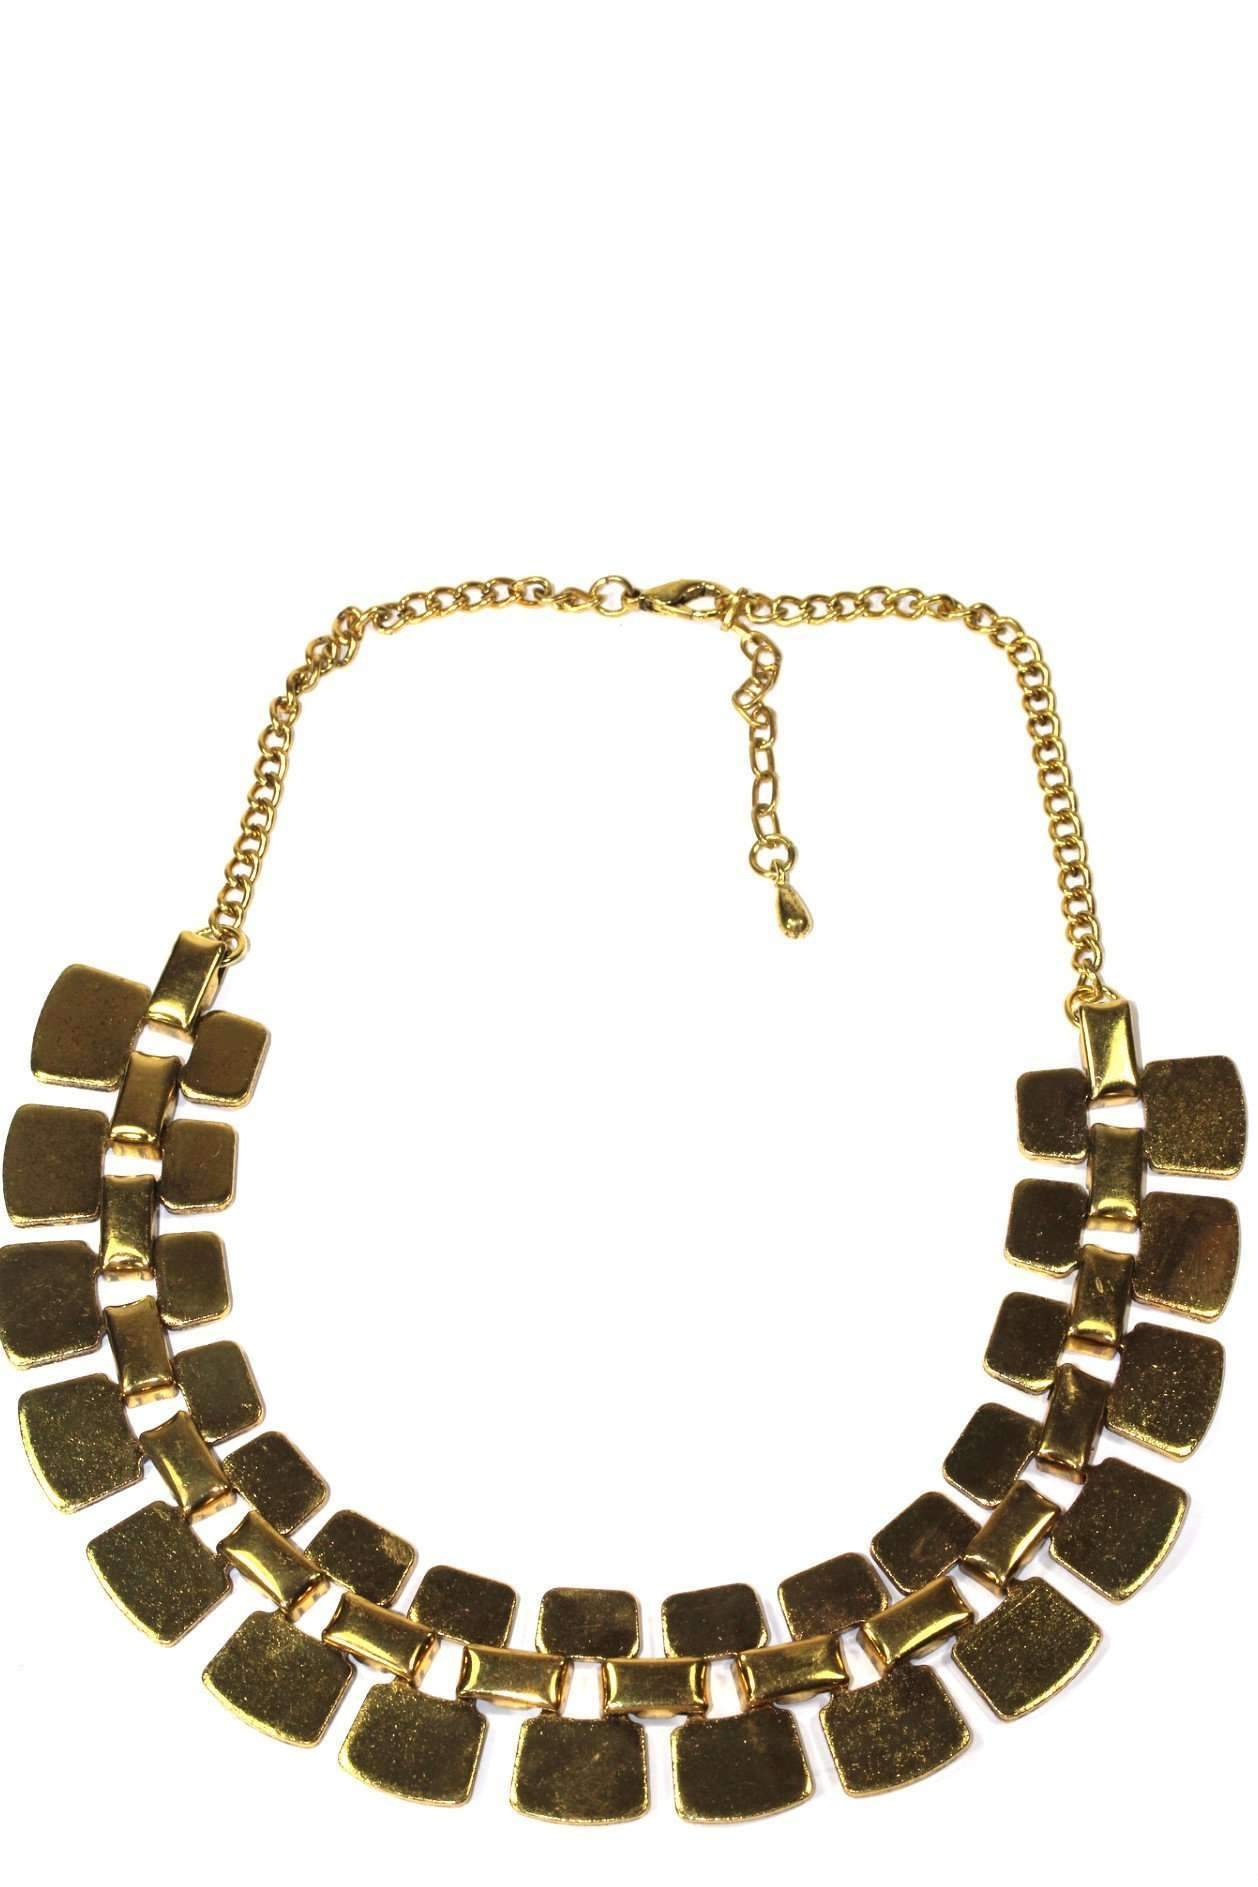 Golden Tribal Necklace with Metal Nuggets - Unique Statement Piece - Necklaces - Bijou Her -  -  - 